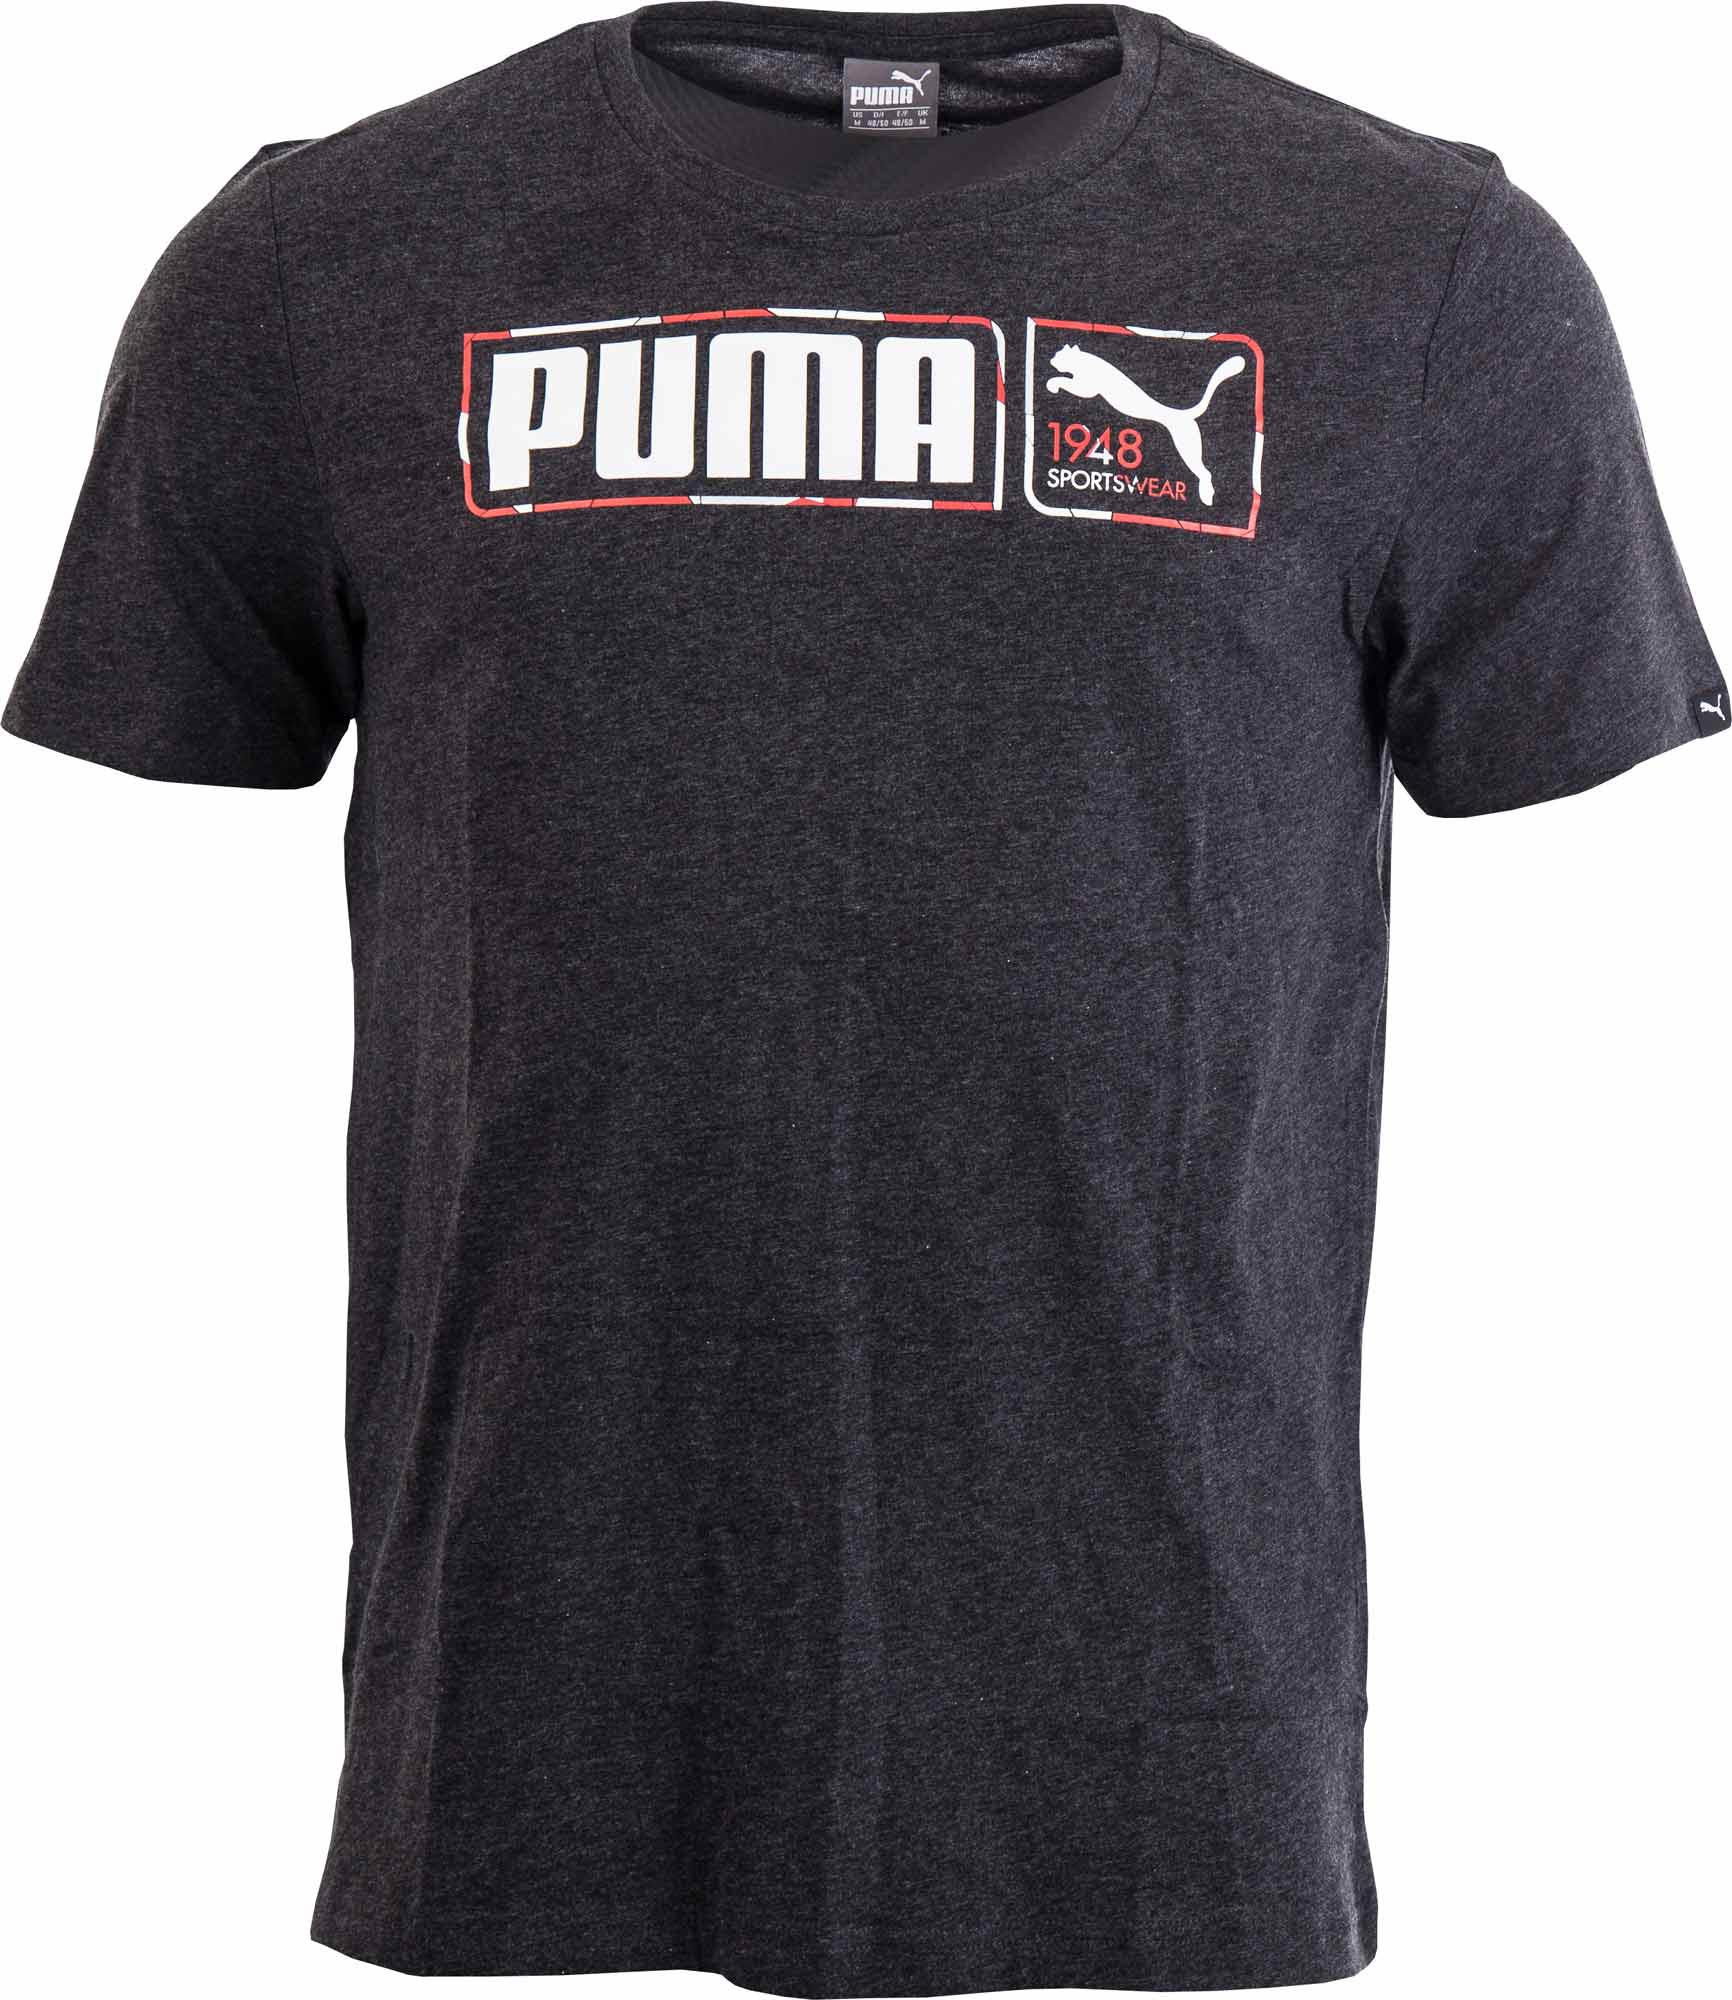 FUN PUMA GRAPHIC TEE - Men's T-Shirt